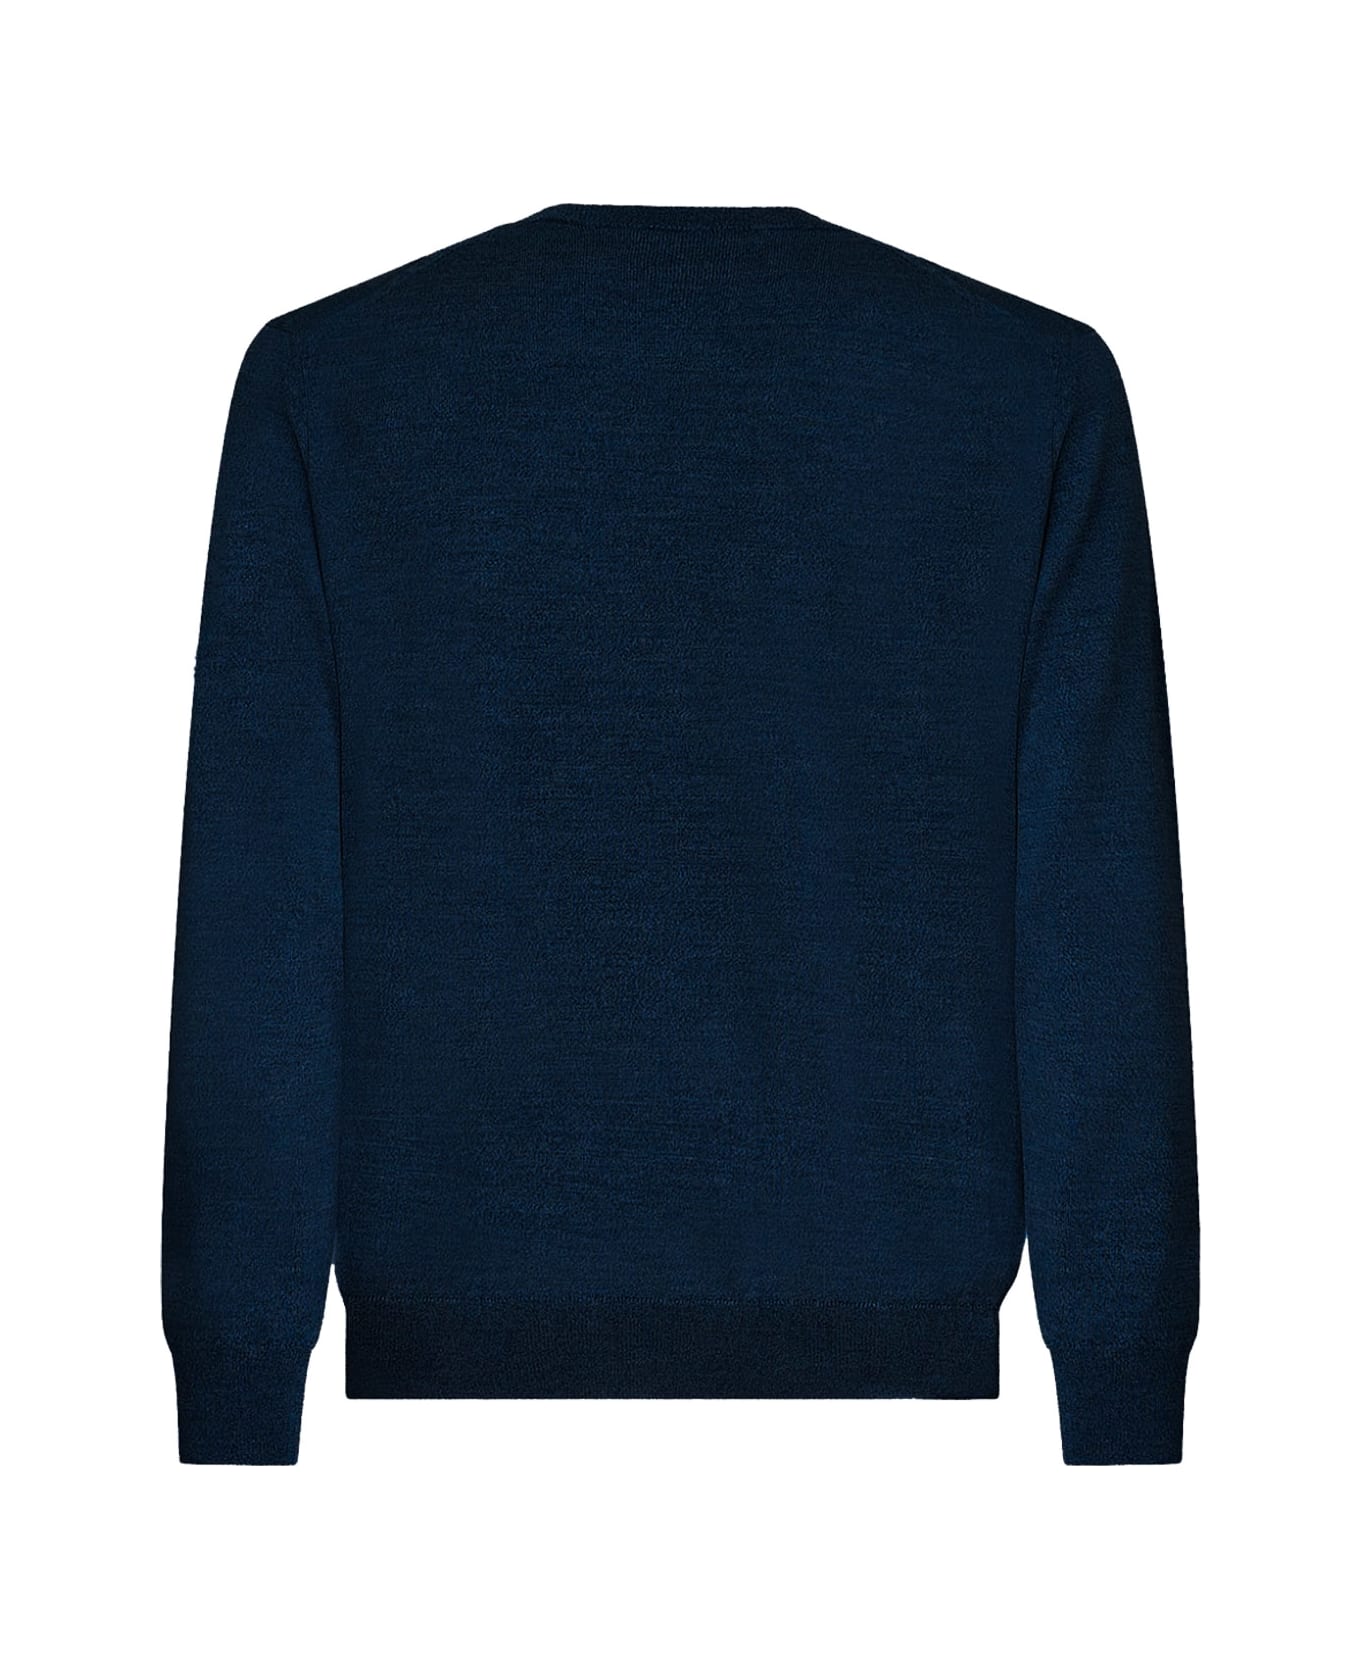 Etro Sweater - Blue